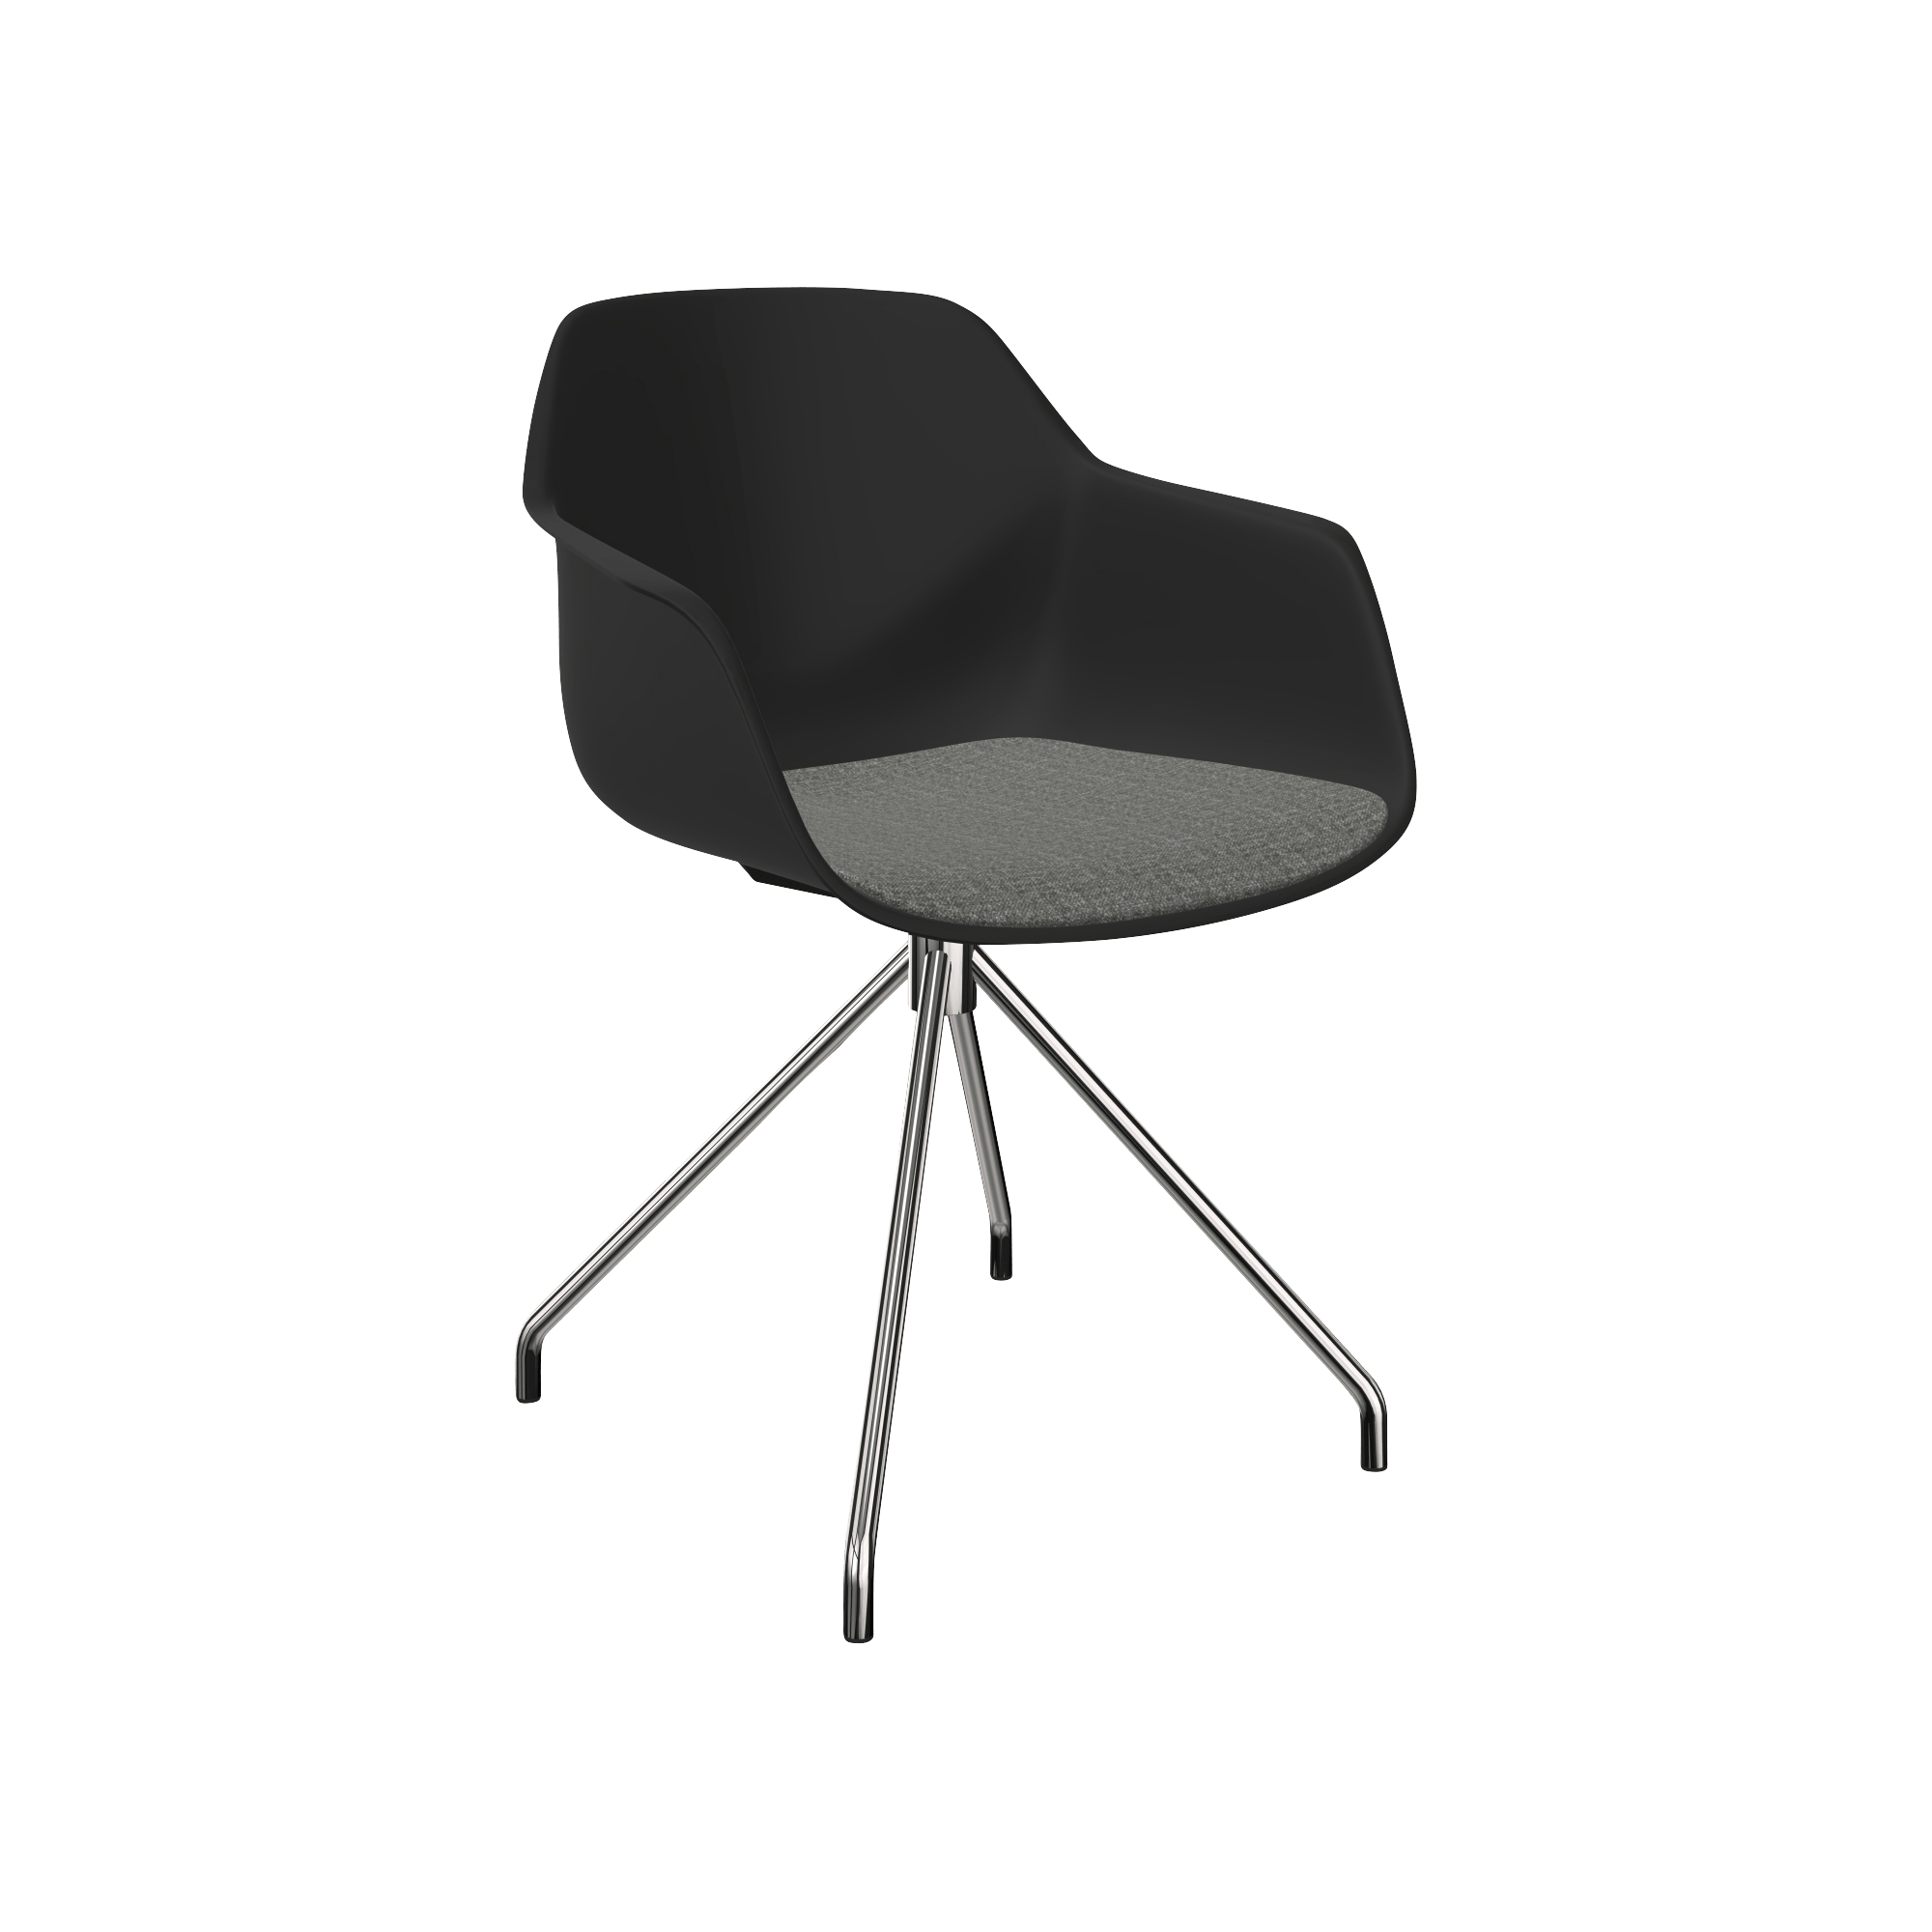 A black designer desk chair with a metal frame